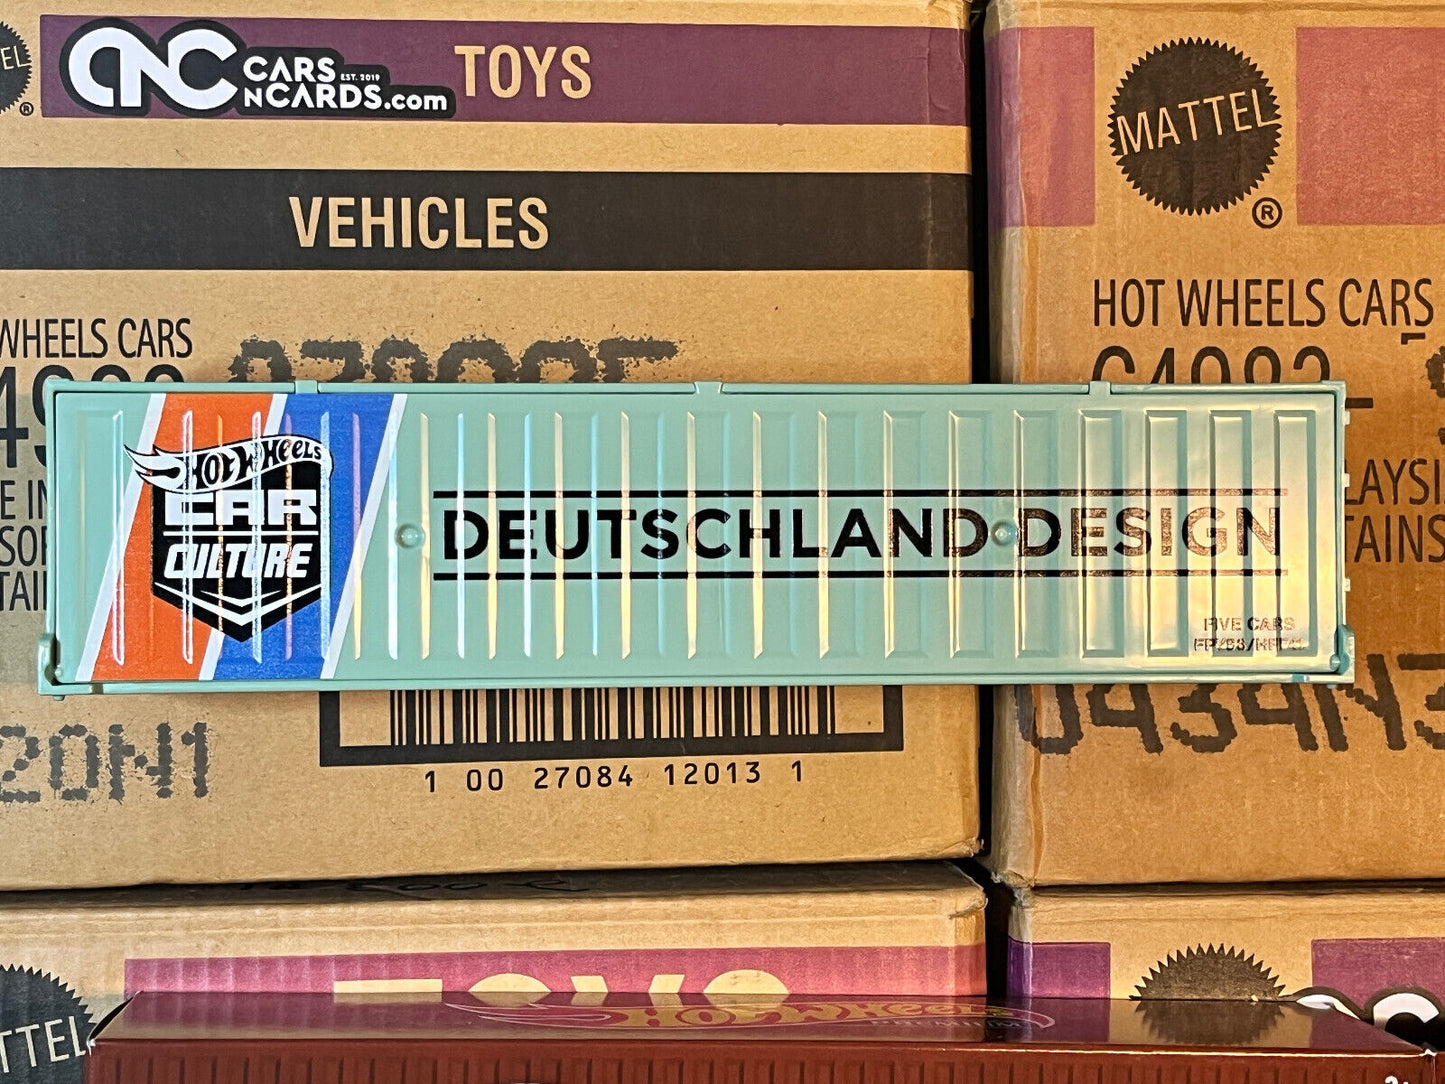 2022 Hot Wheels Premium Car Culture Deuschland Design Container Box Set Opened